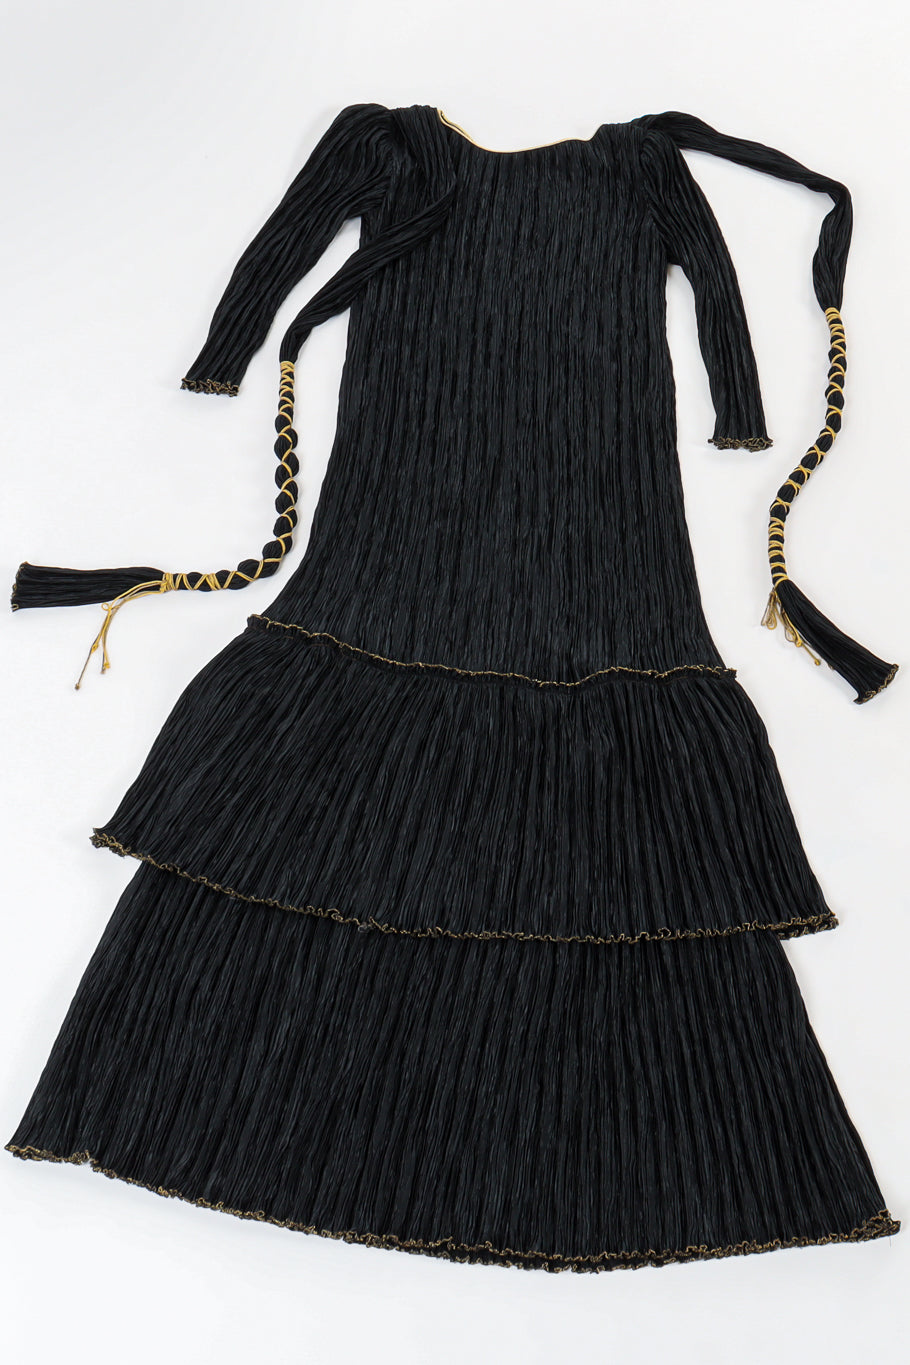 Vintage Mary McFadden Pilissé Pleat Rope Tassel Dress dres front flat @ Recess LA